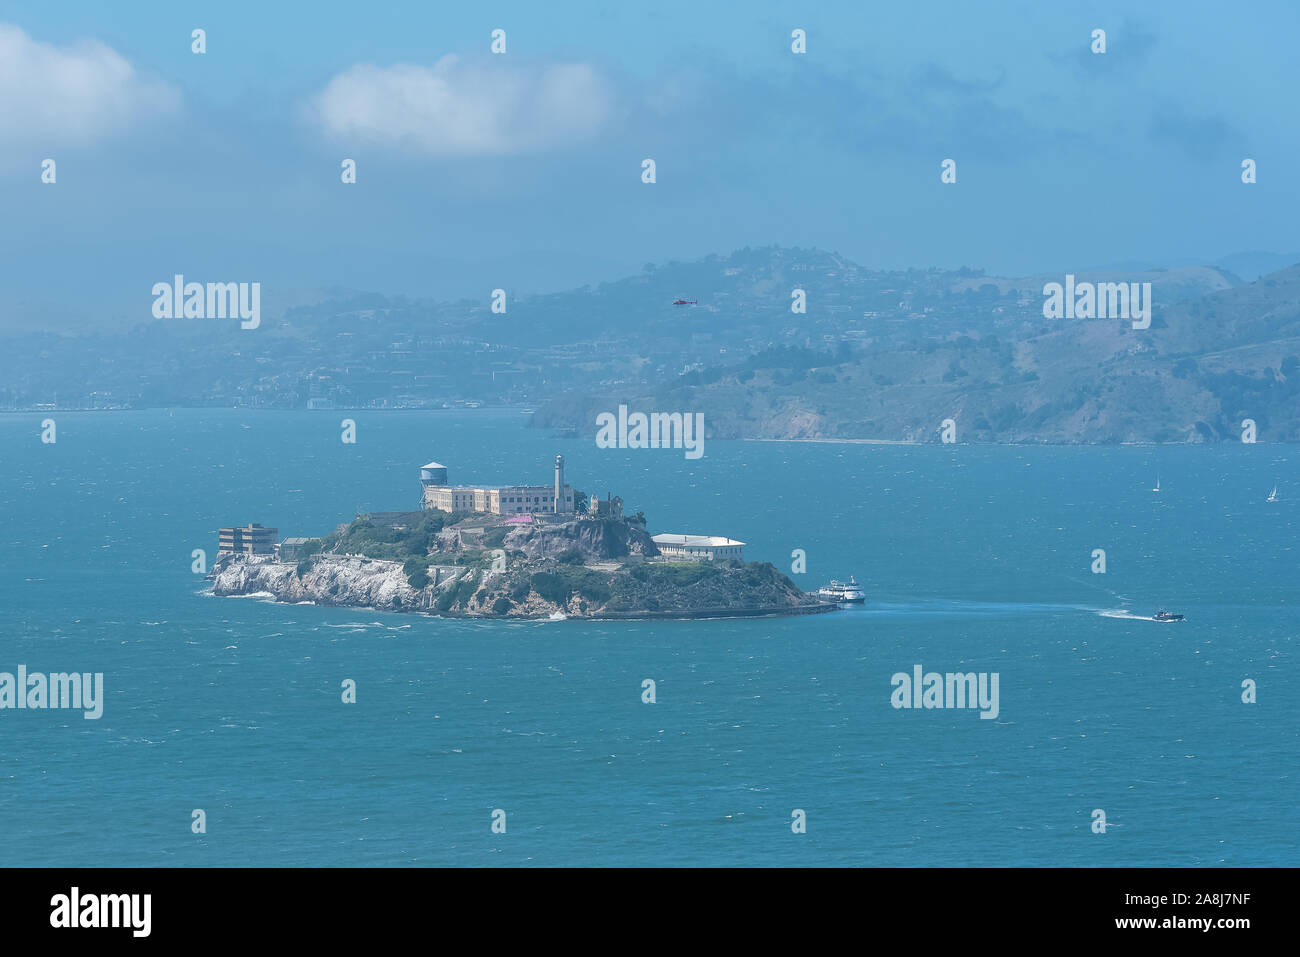 San Francisco in California, the Alcatraz island in the beautiful bay, and the Pier 39 with the marina Stock Photo